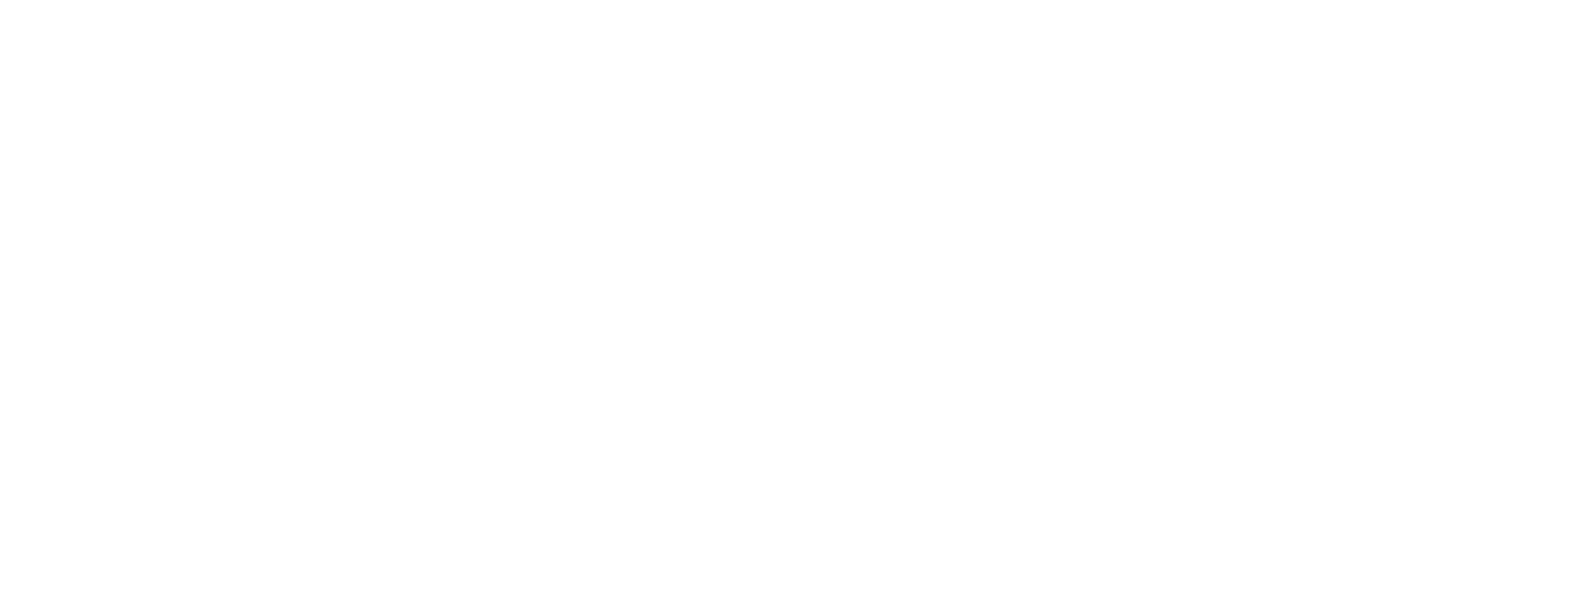 CAE logo for dark backgrounds (transparent PNG)